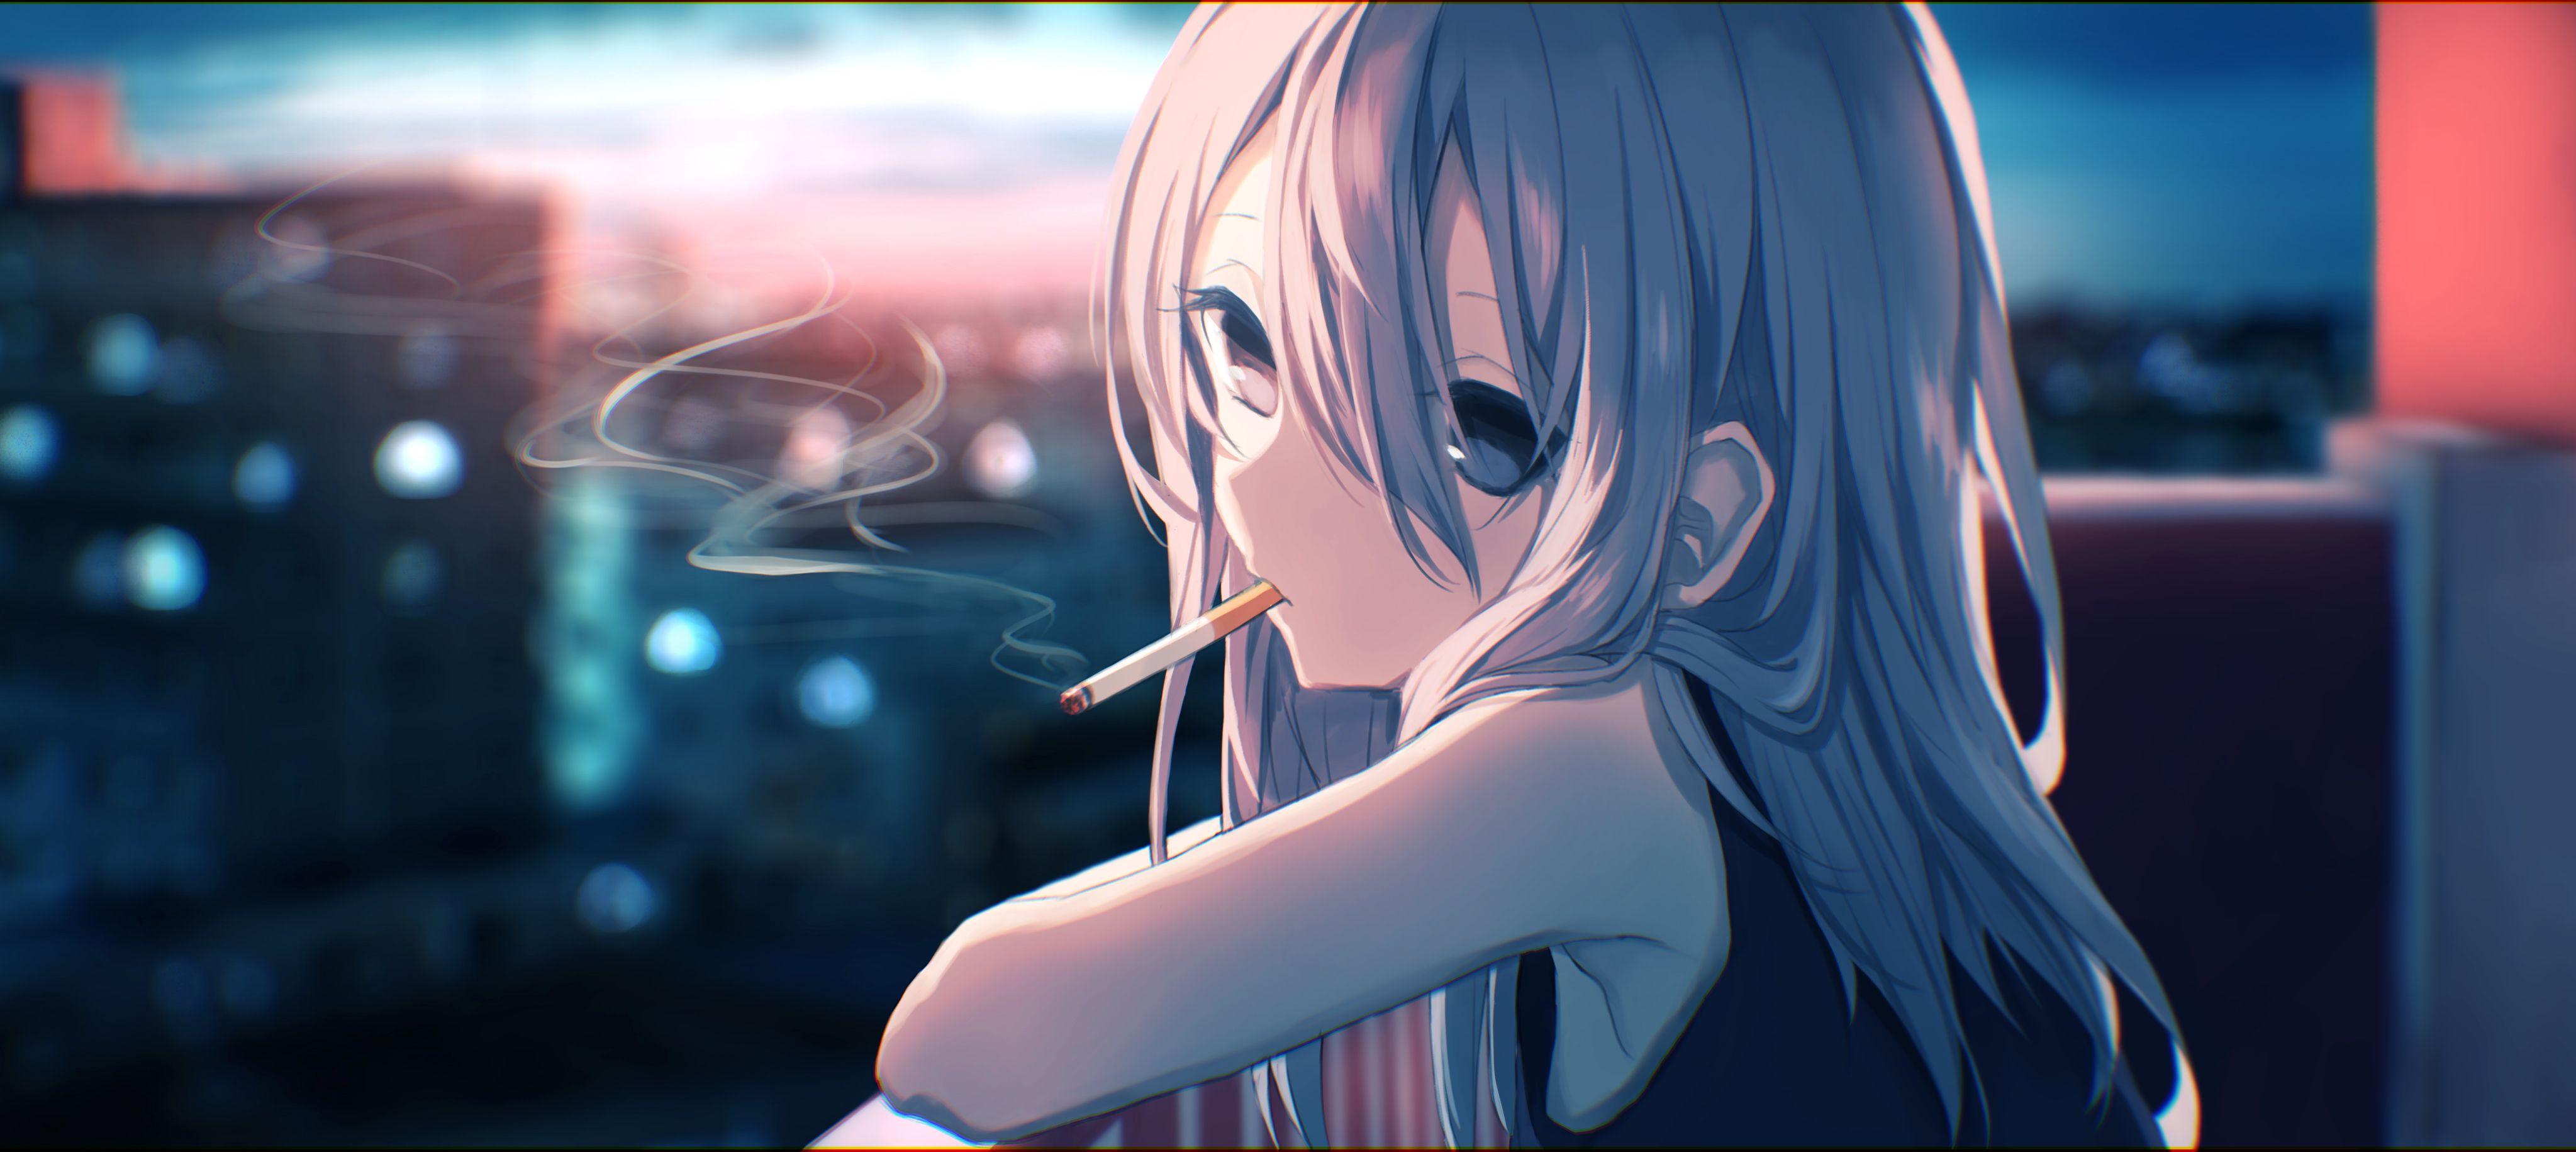 Smoking Anime Wallpapers Top Free Smoking Anime Backgrounds